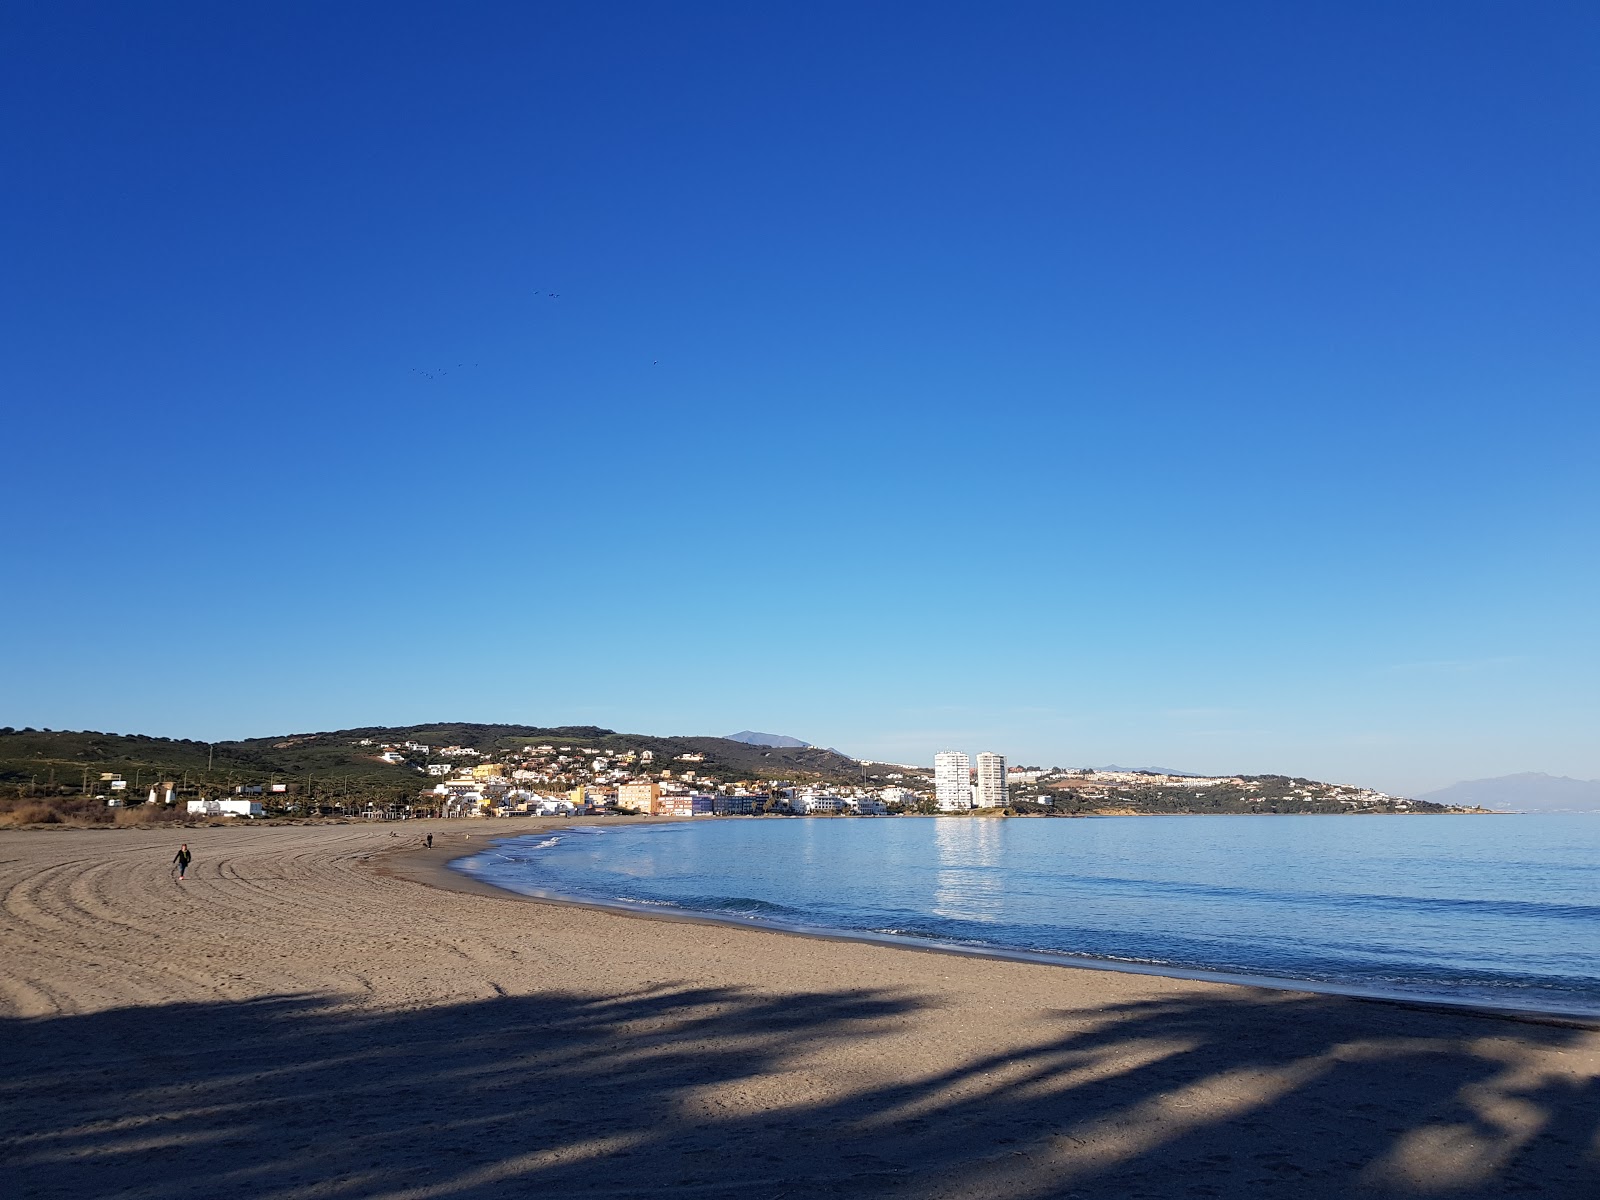 Foto di Playa de Torreguadiaro con una superficie del sabbia grigia